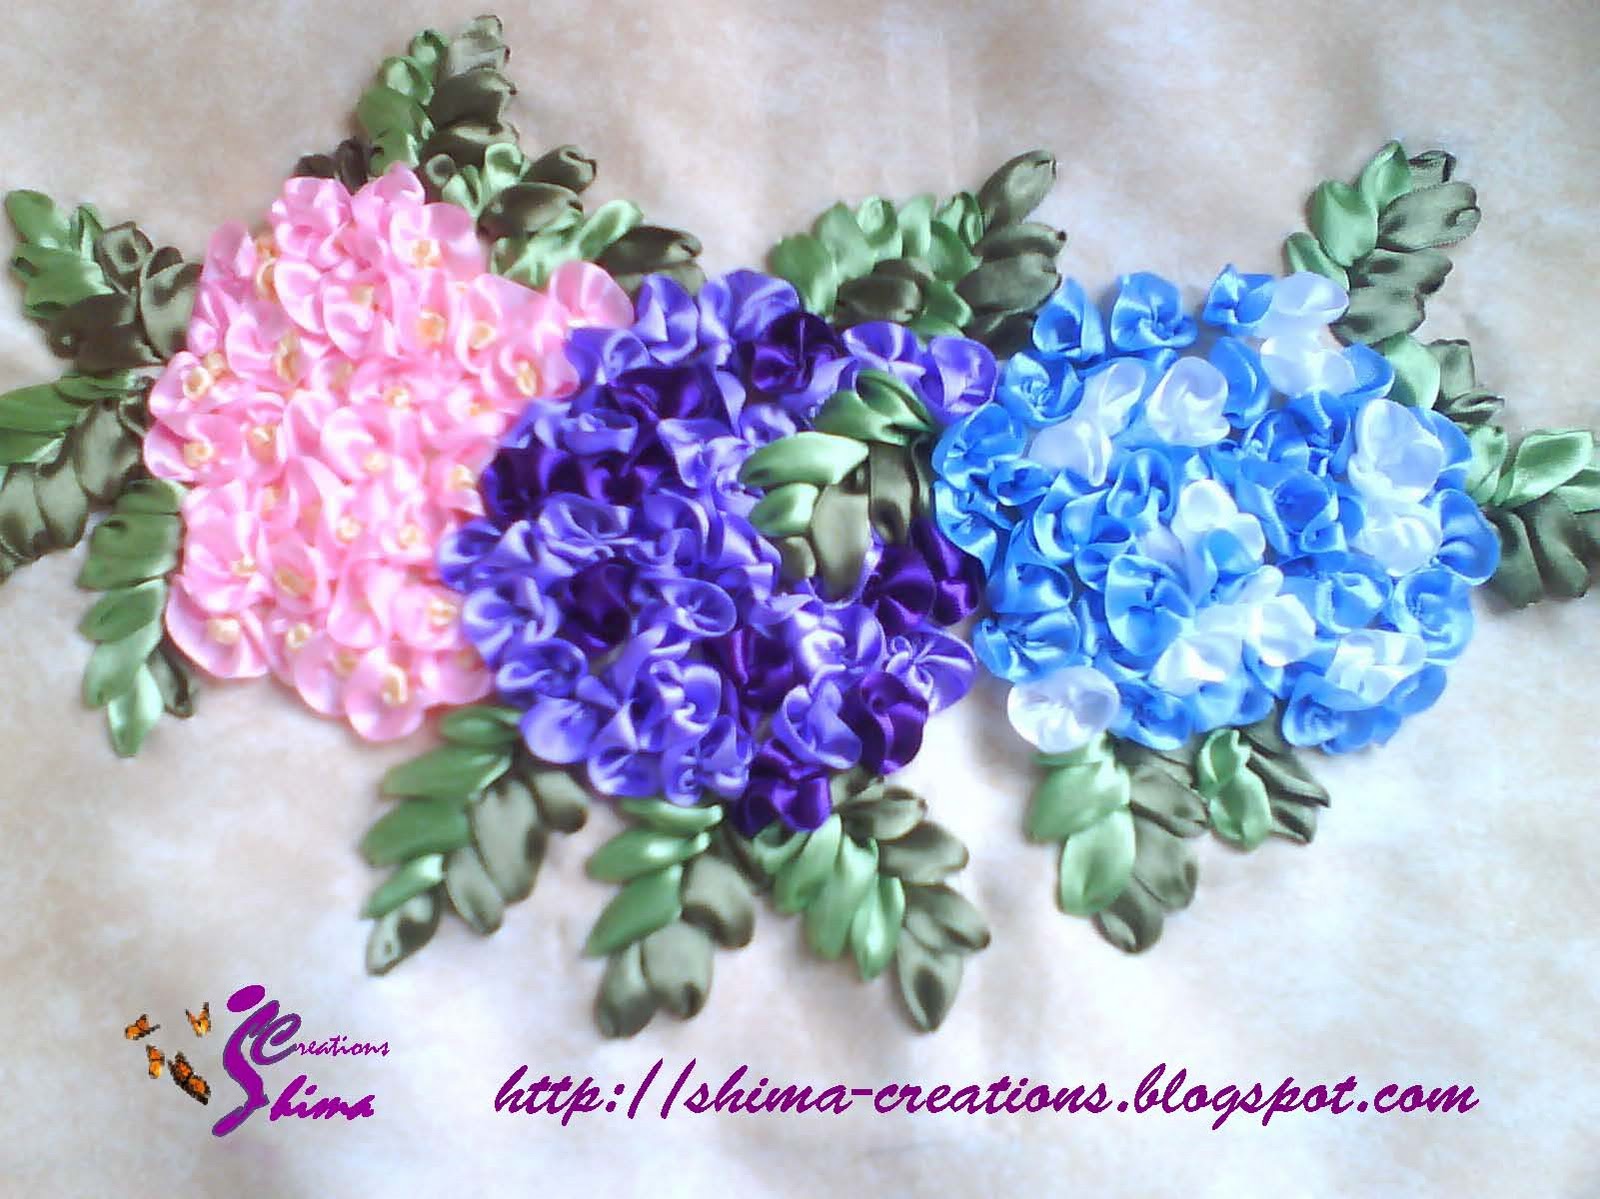 Shima Hasim The Art of Embroidery and Needlework: Hydrangea Flower